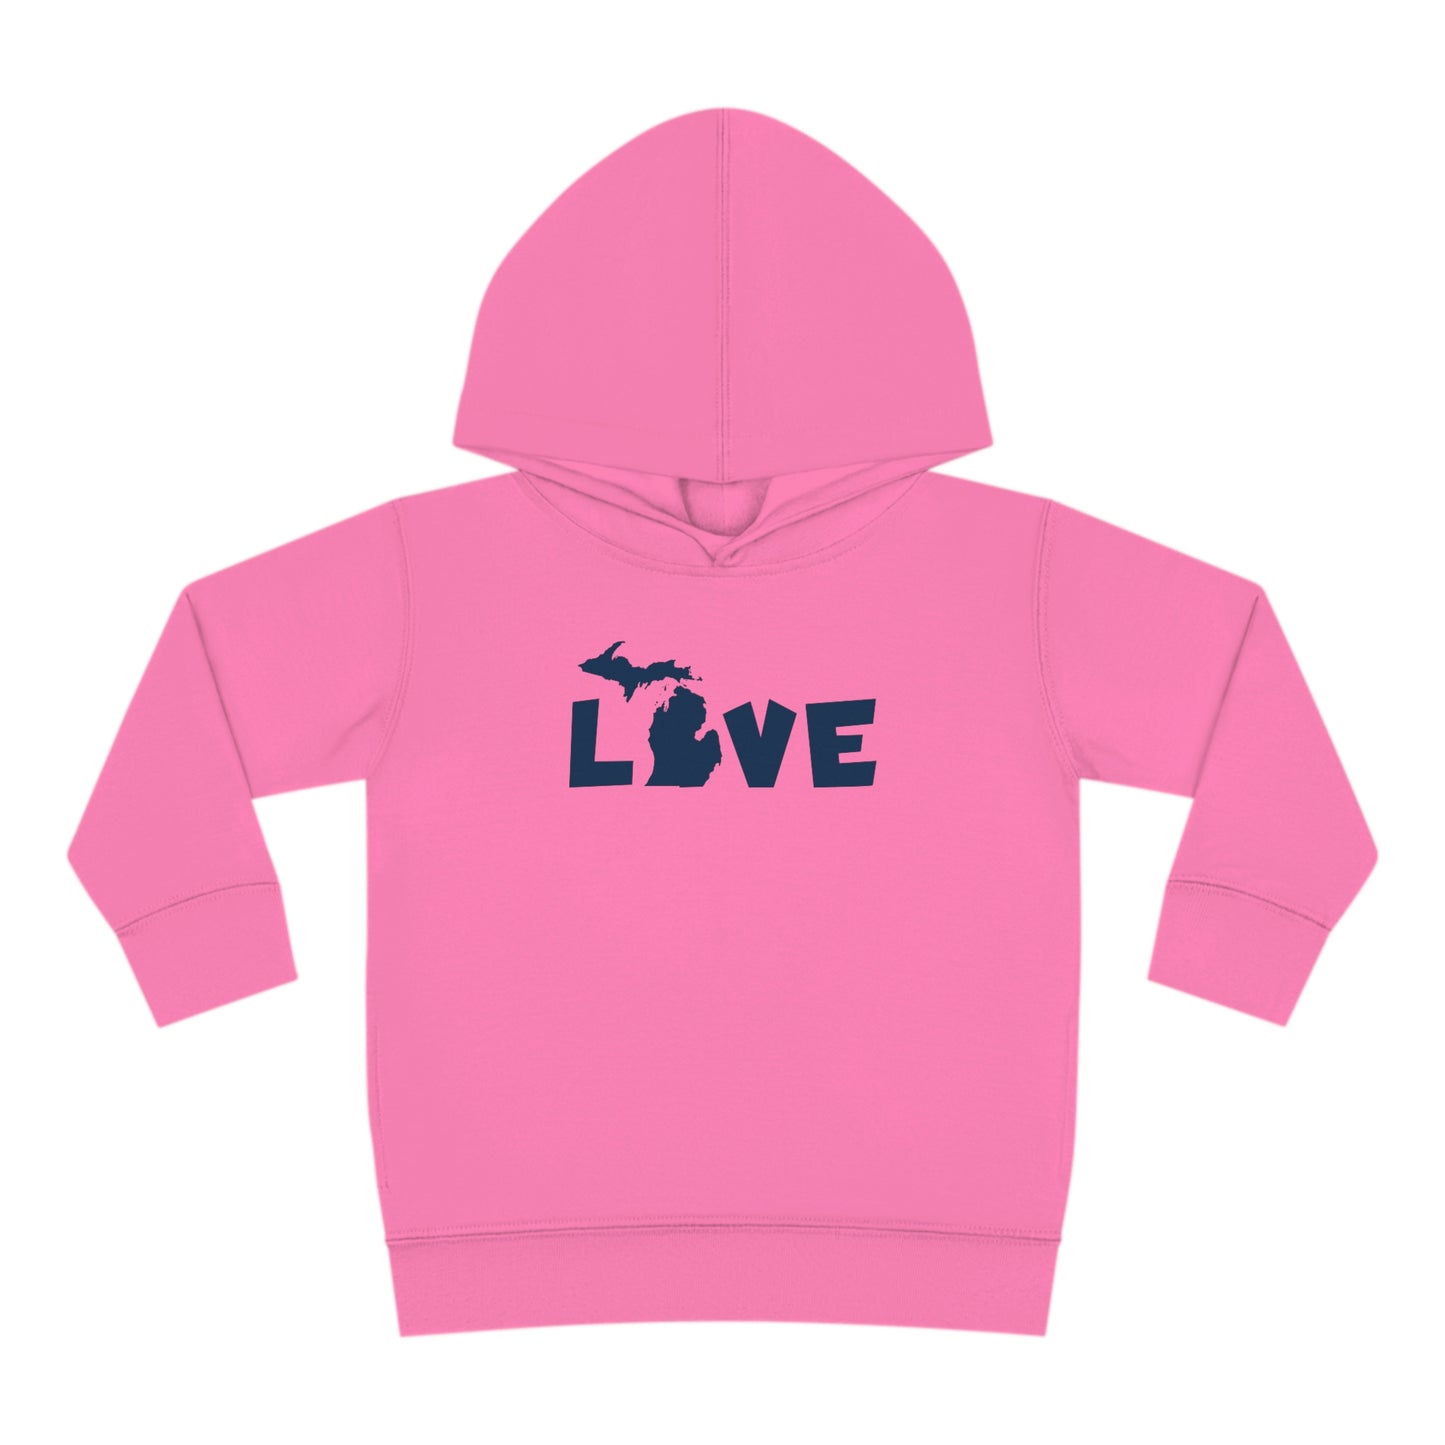 Michigan 'Love' Hoodie (Whimsical Sans Font) | Unisex Toddler